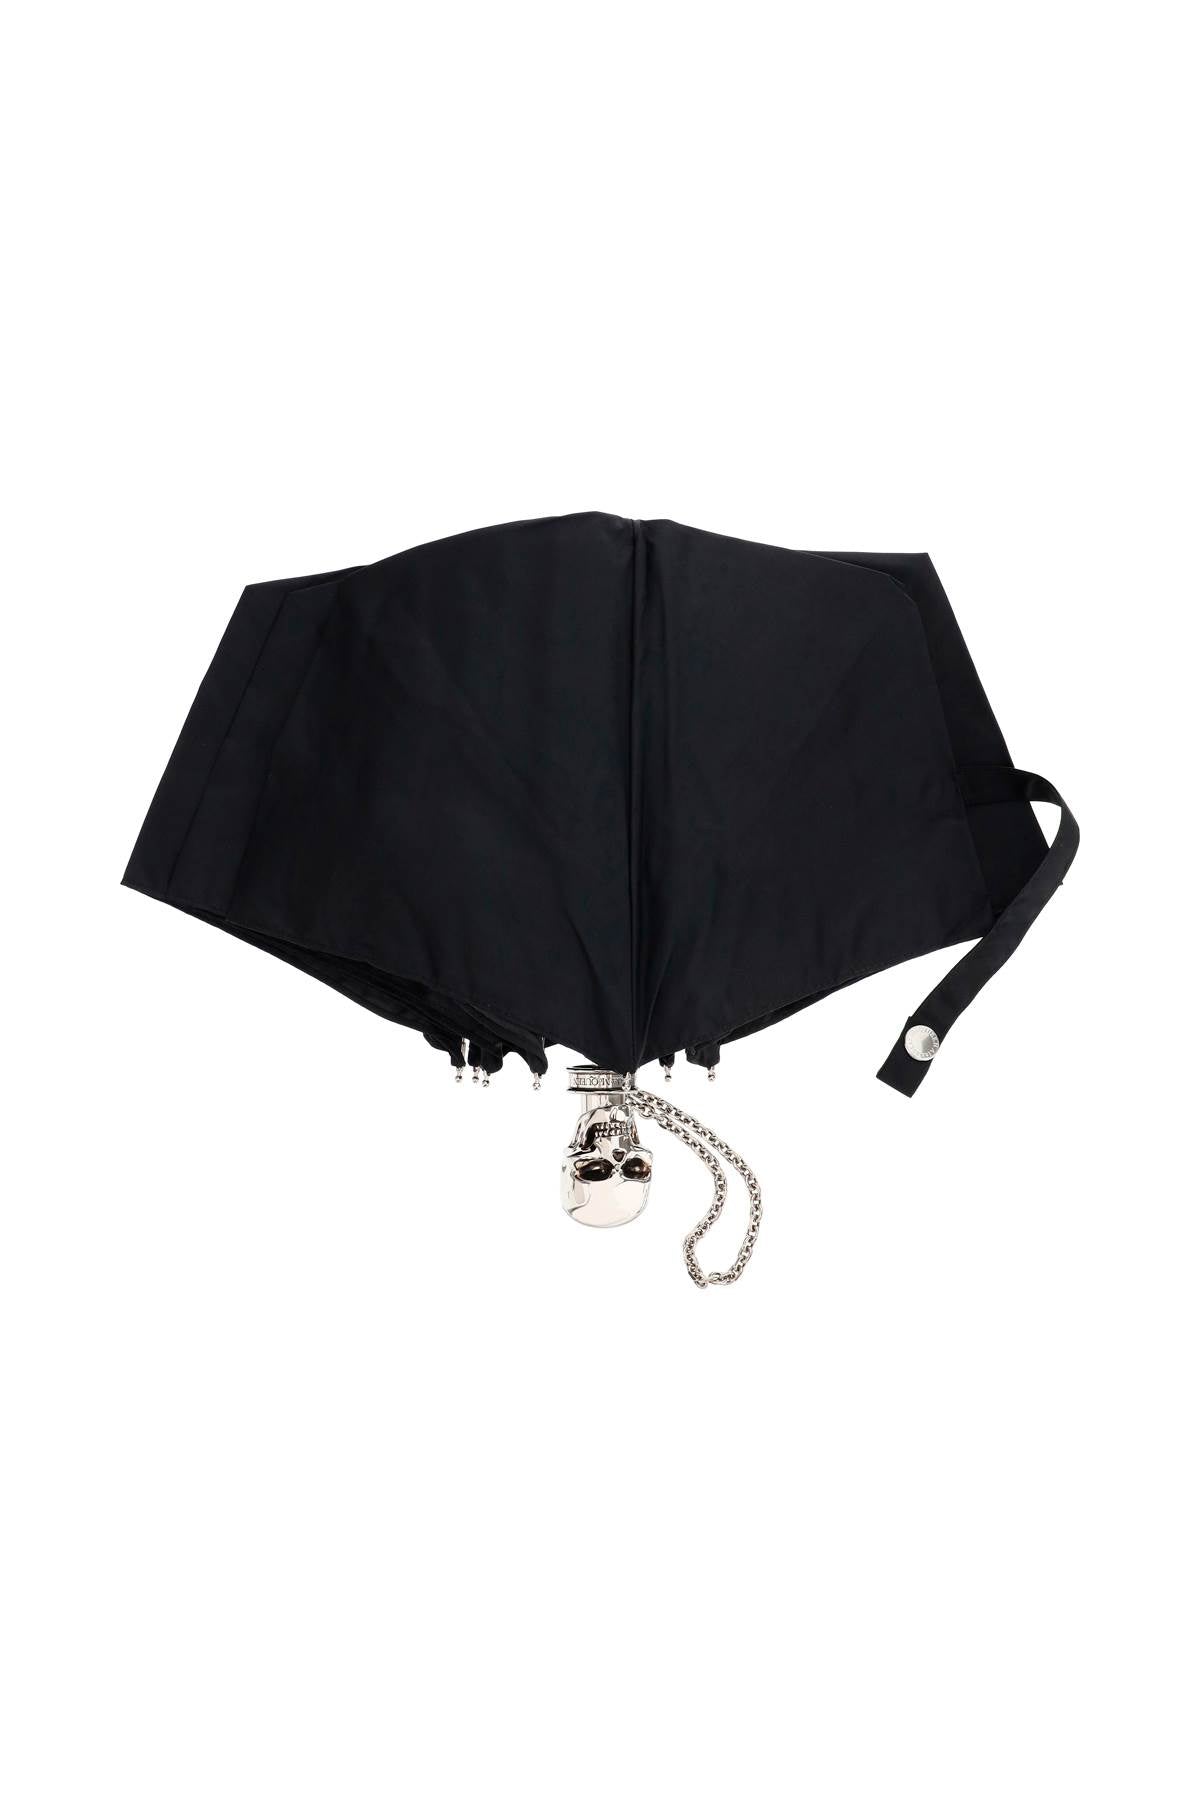 ALEXANDER MCQUEEN Black Folding Umbrella - Iconic Skull Handle, Nylon Case, Gifting Accessory